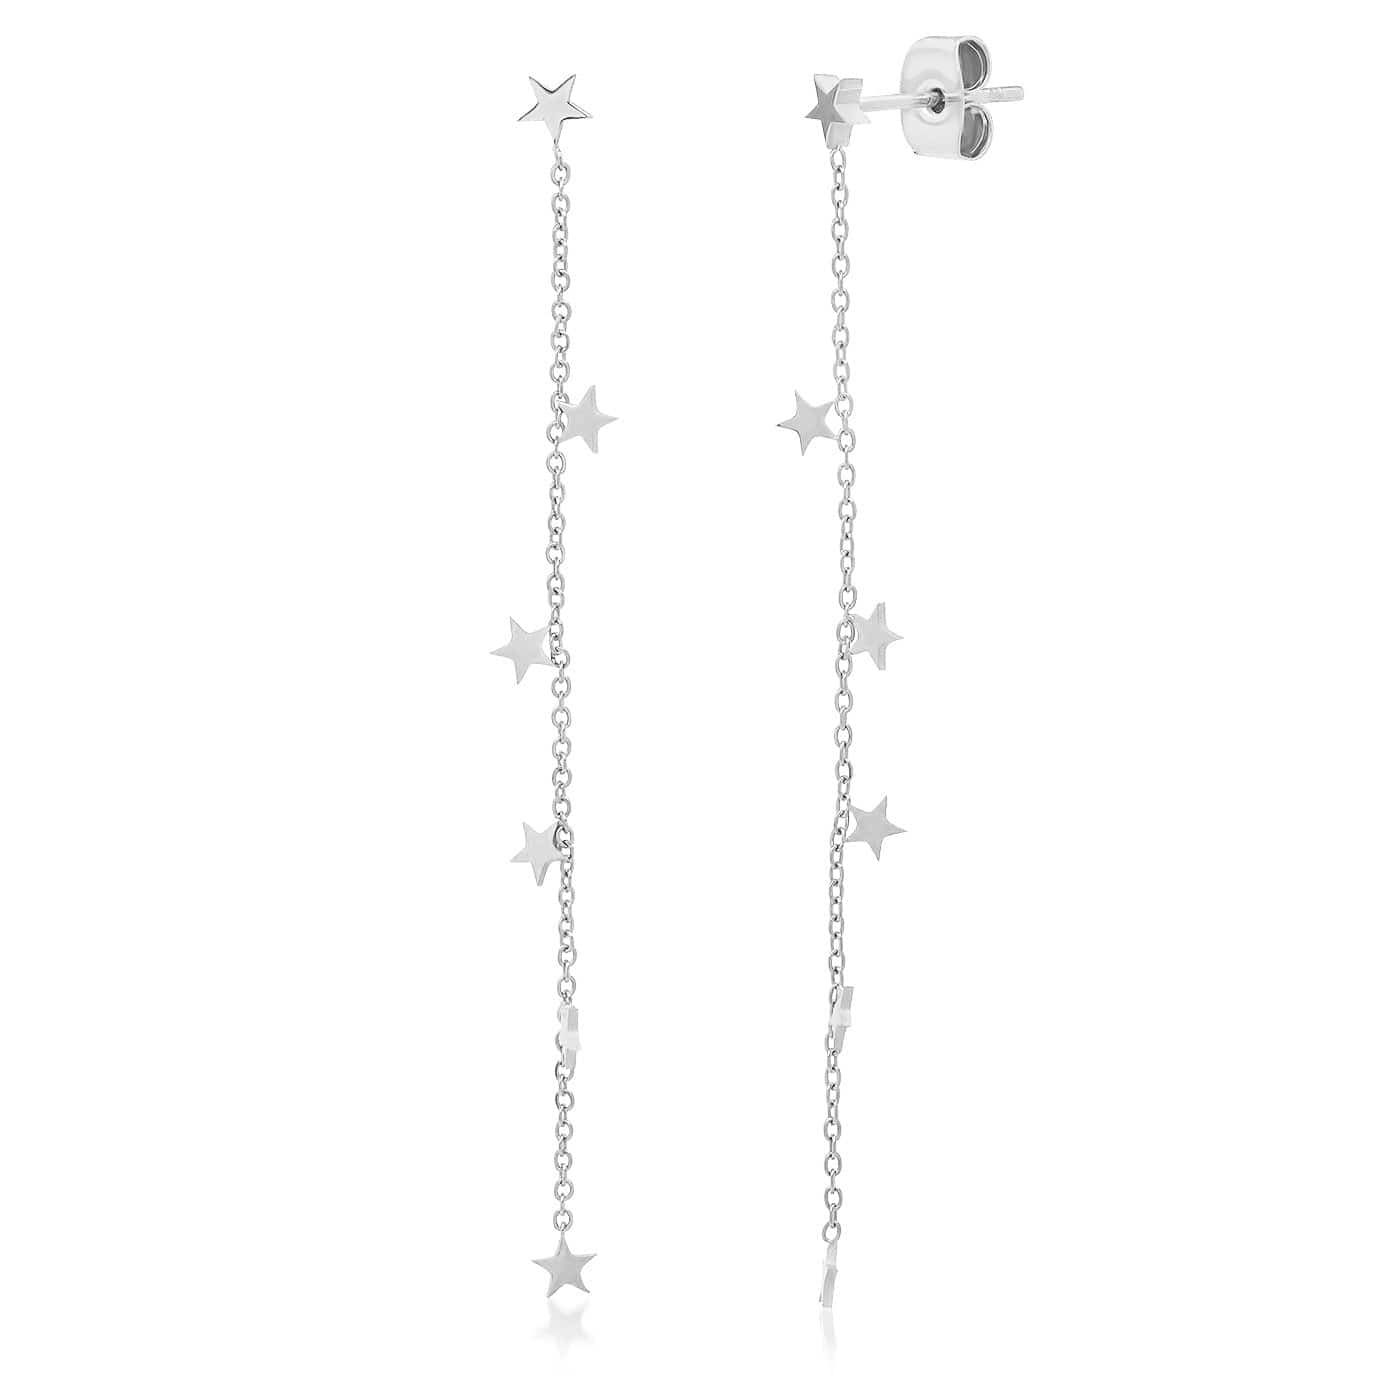 TAI JEWELRY Earrings Silver Chain Dangle Earrings With Star Charms